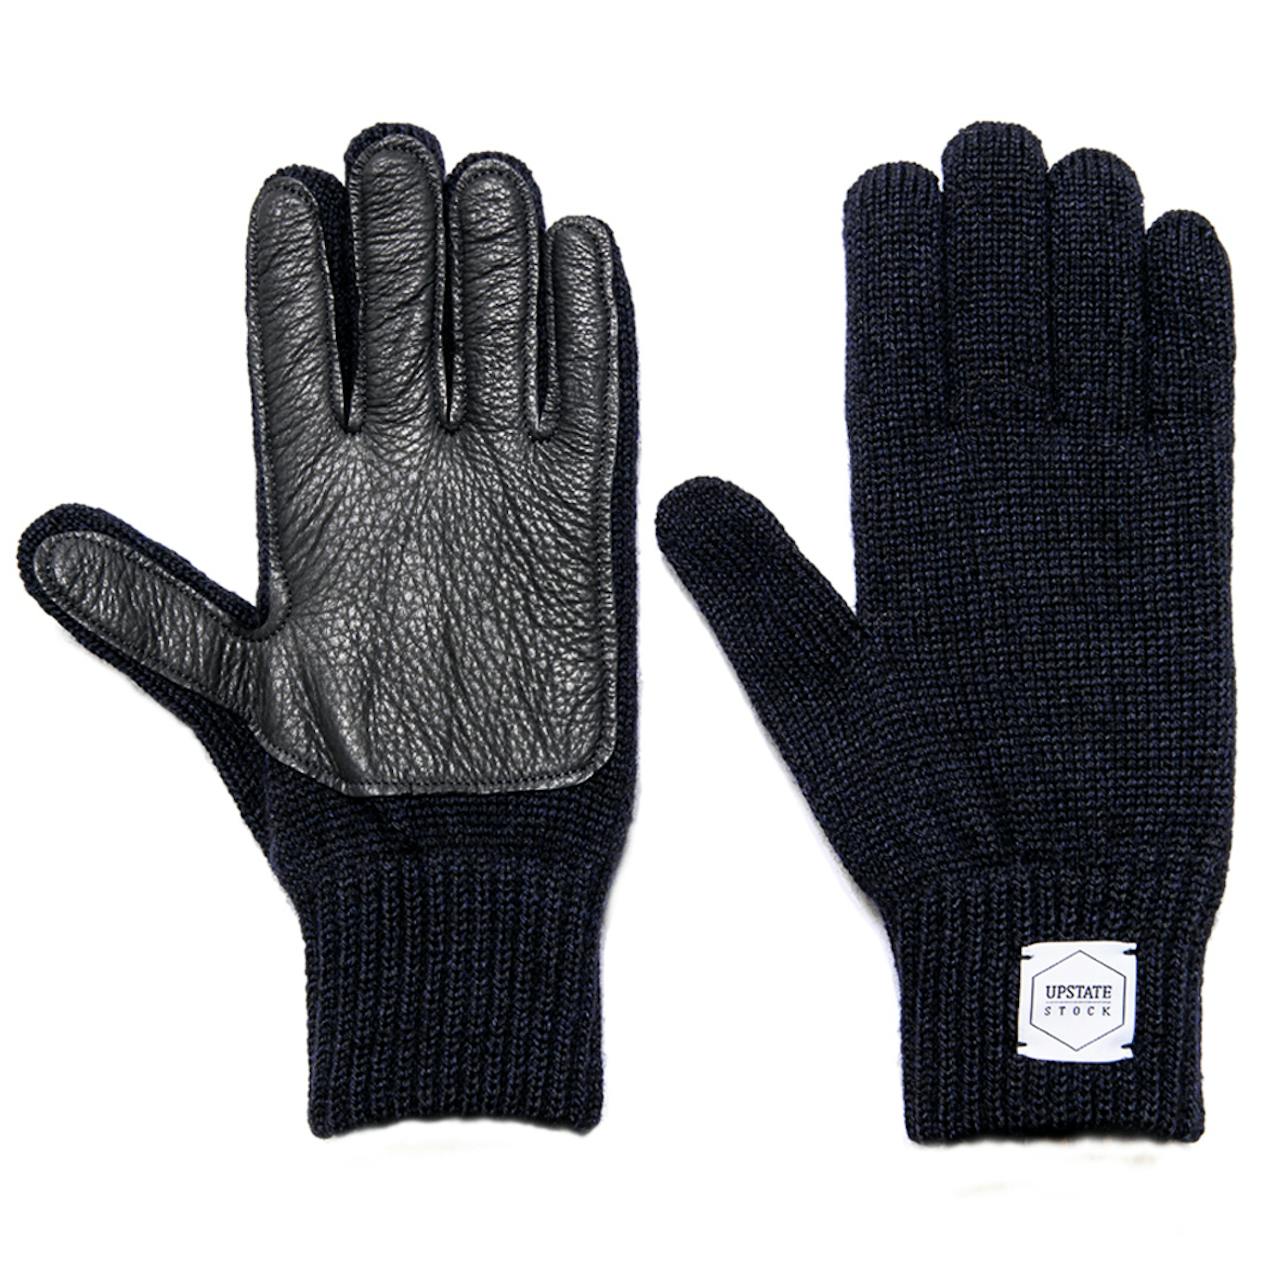 Upstate Stock Full Fingers Ragg Wool Glove with Black Deerskin